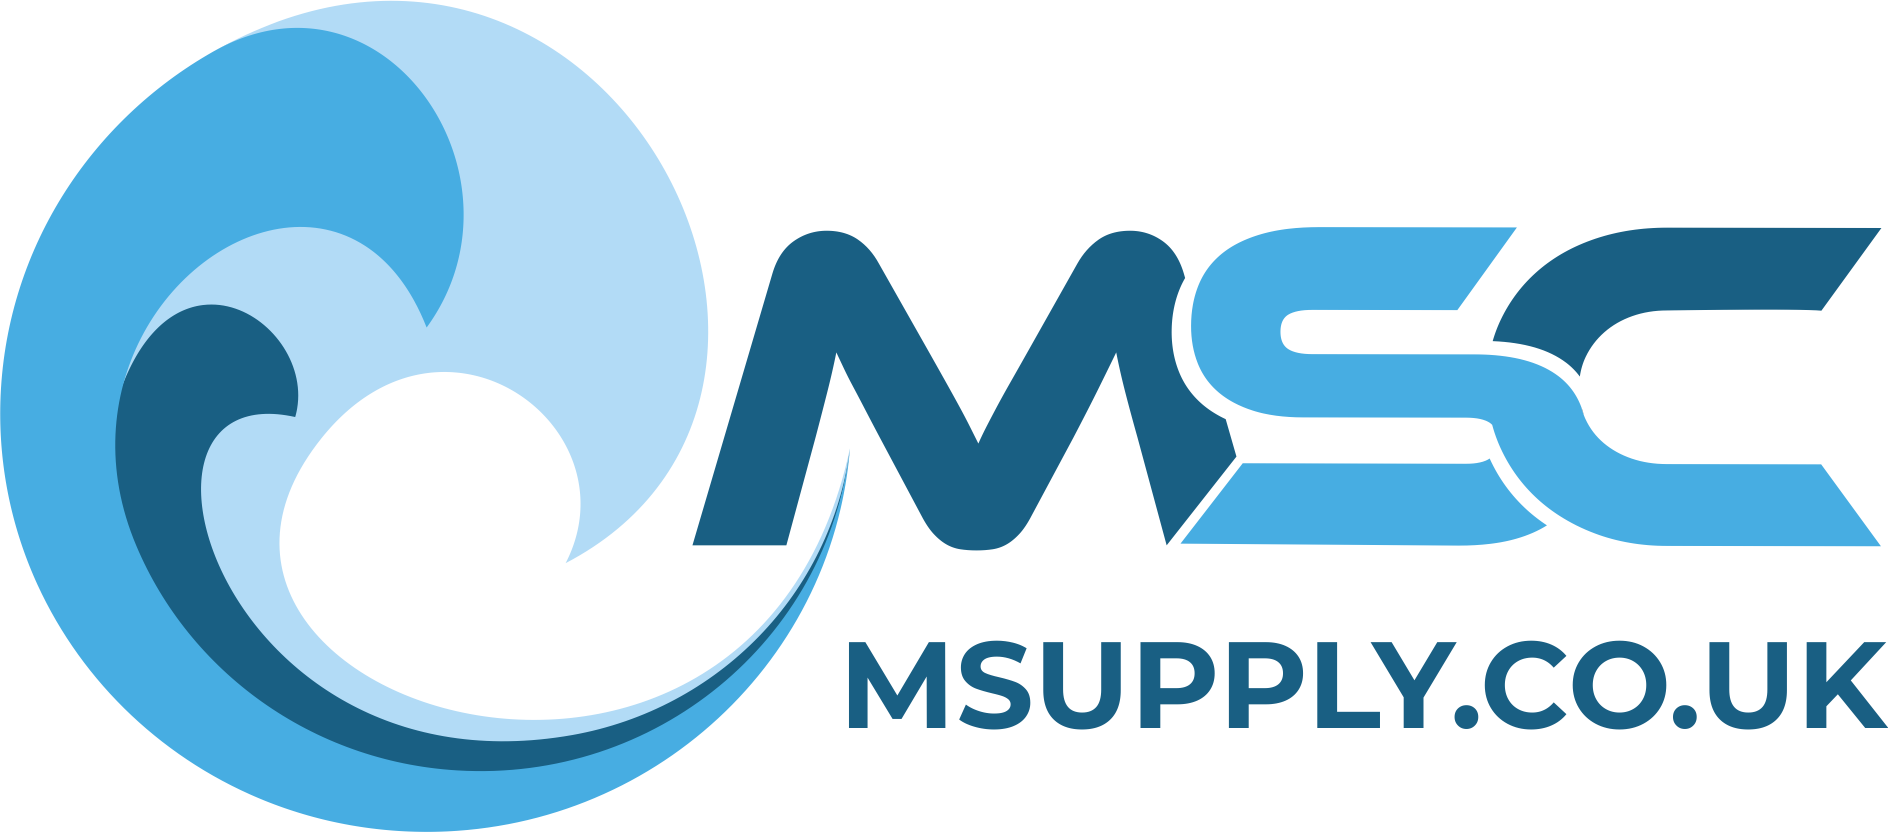 logo for The Maintenance Supply Co Ltd